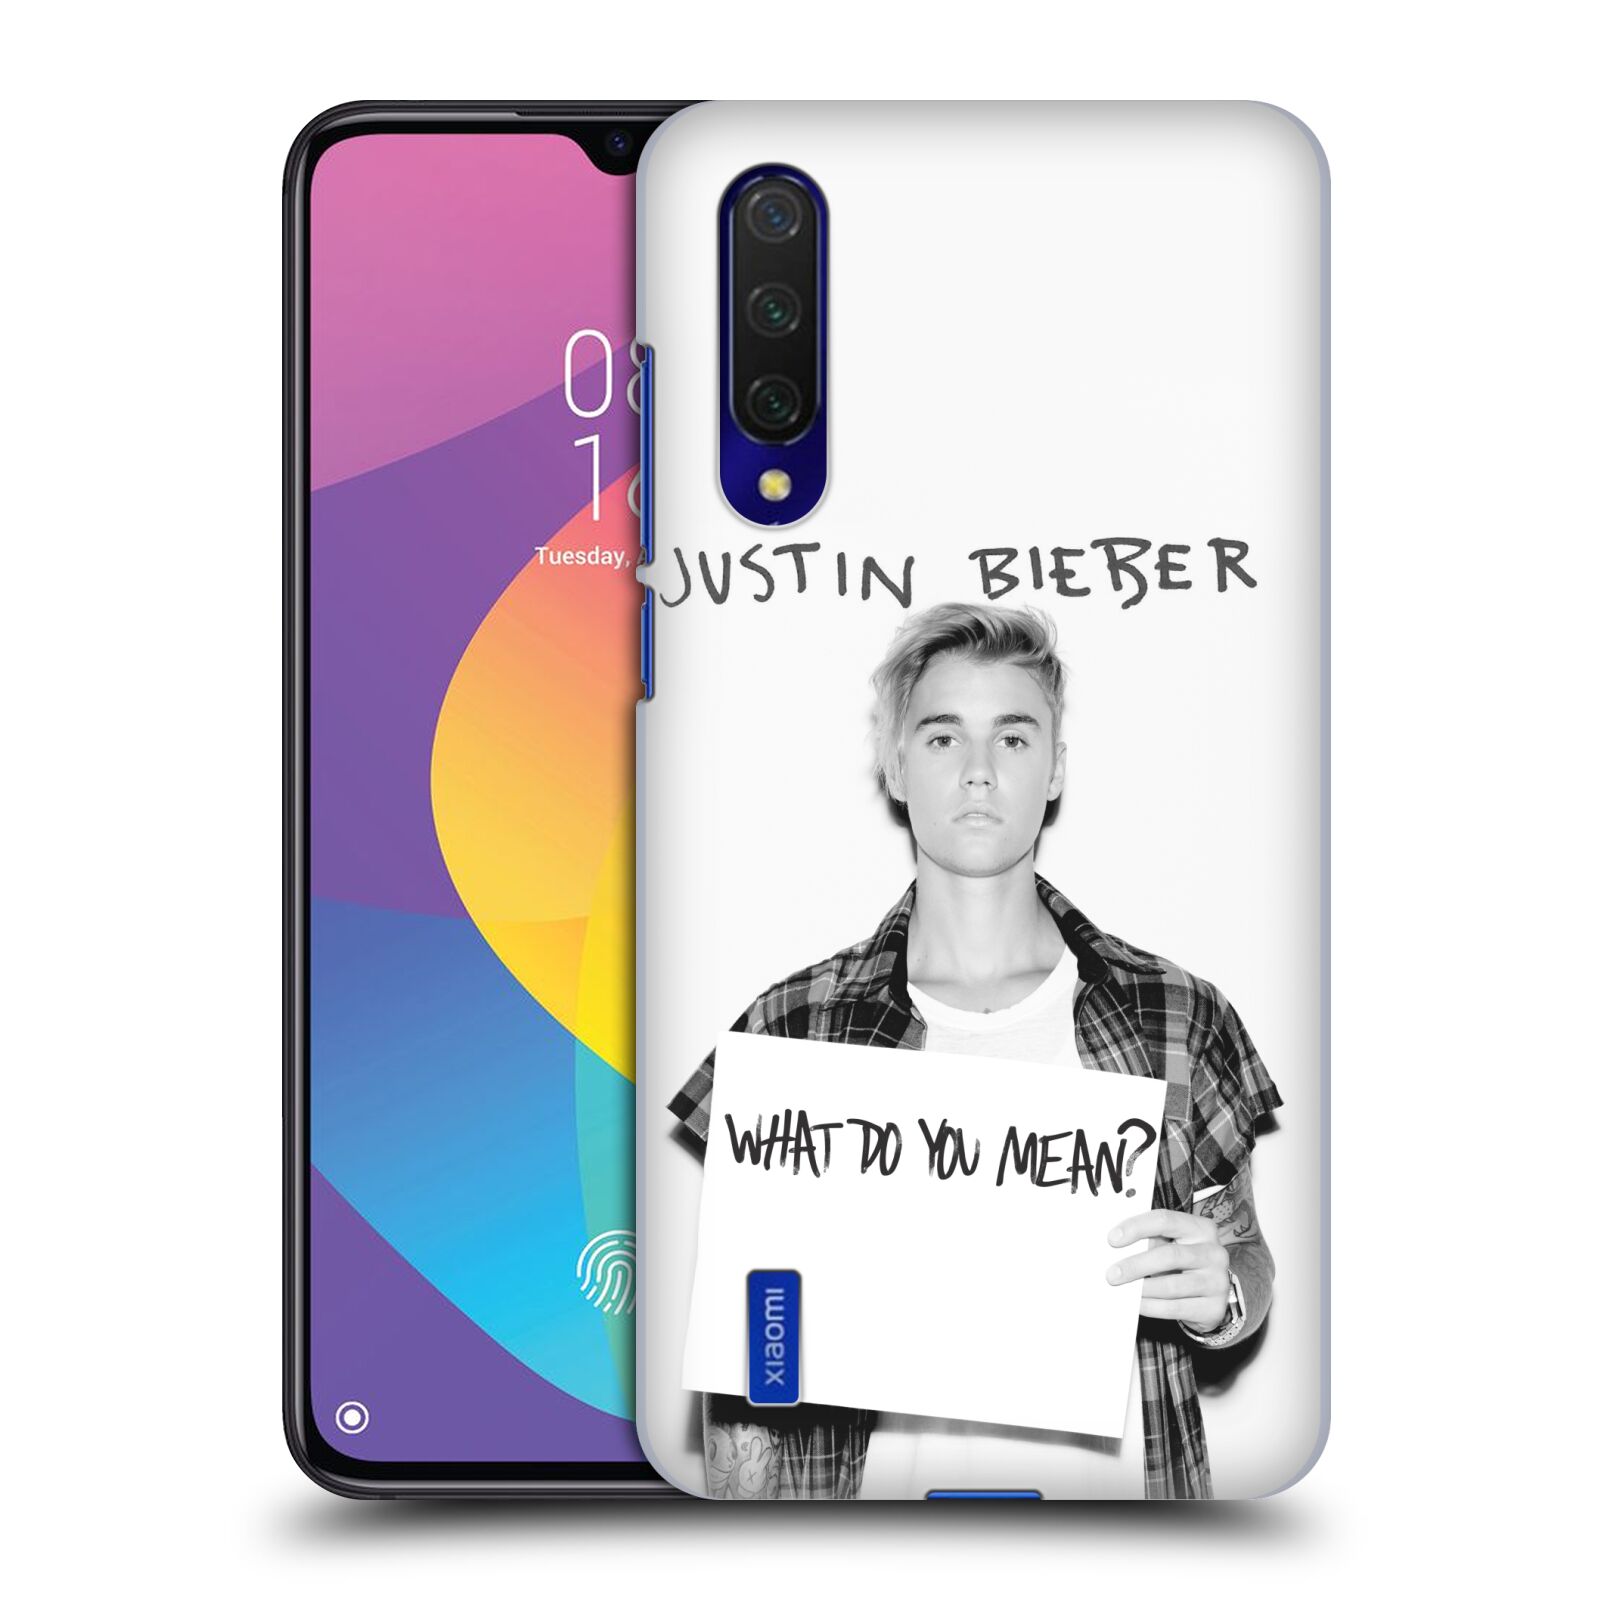 Zadní kryt na mobil Xiaomi MI 9 LITE Justin Bieber foto Purpose What do you mean